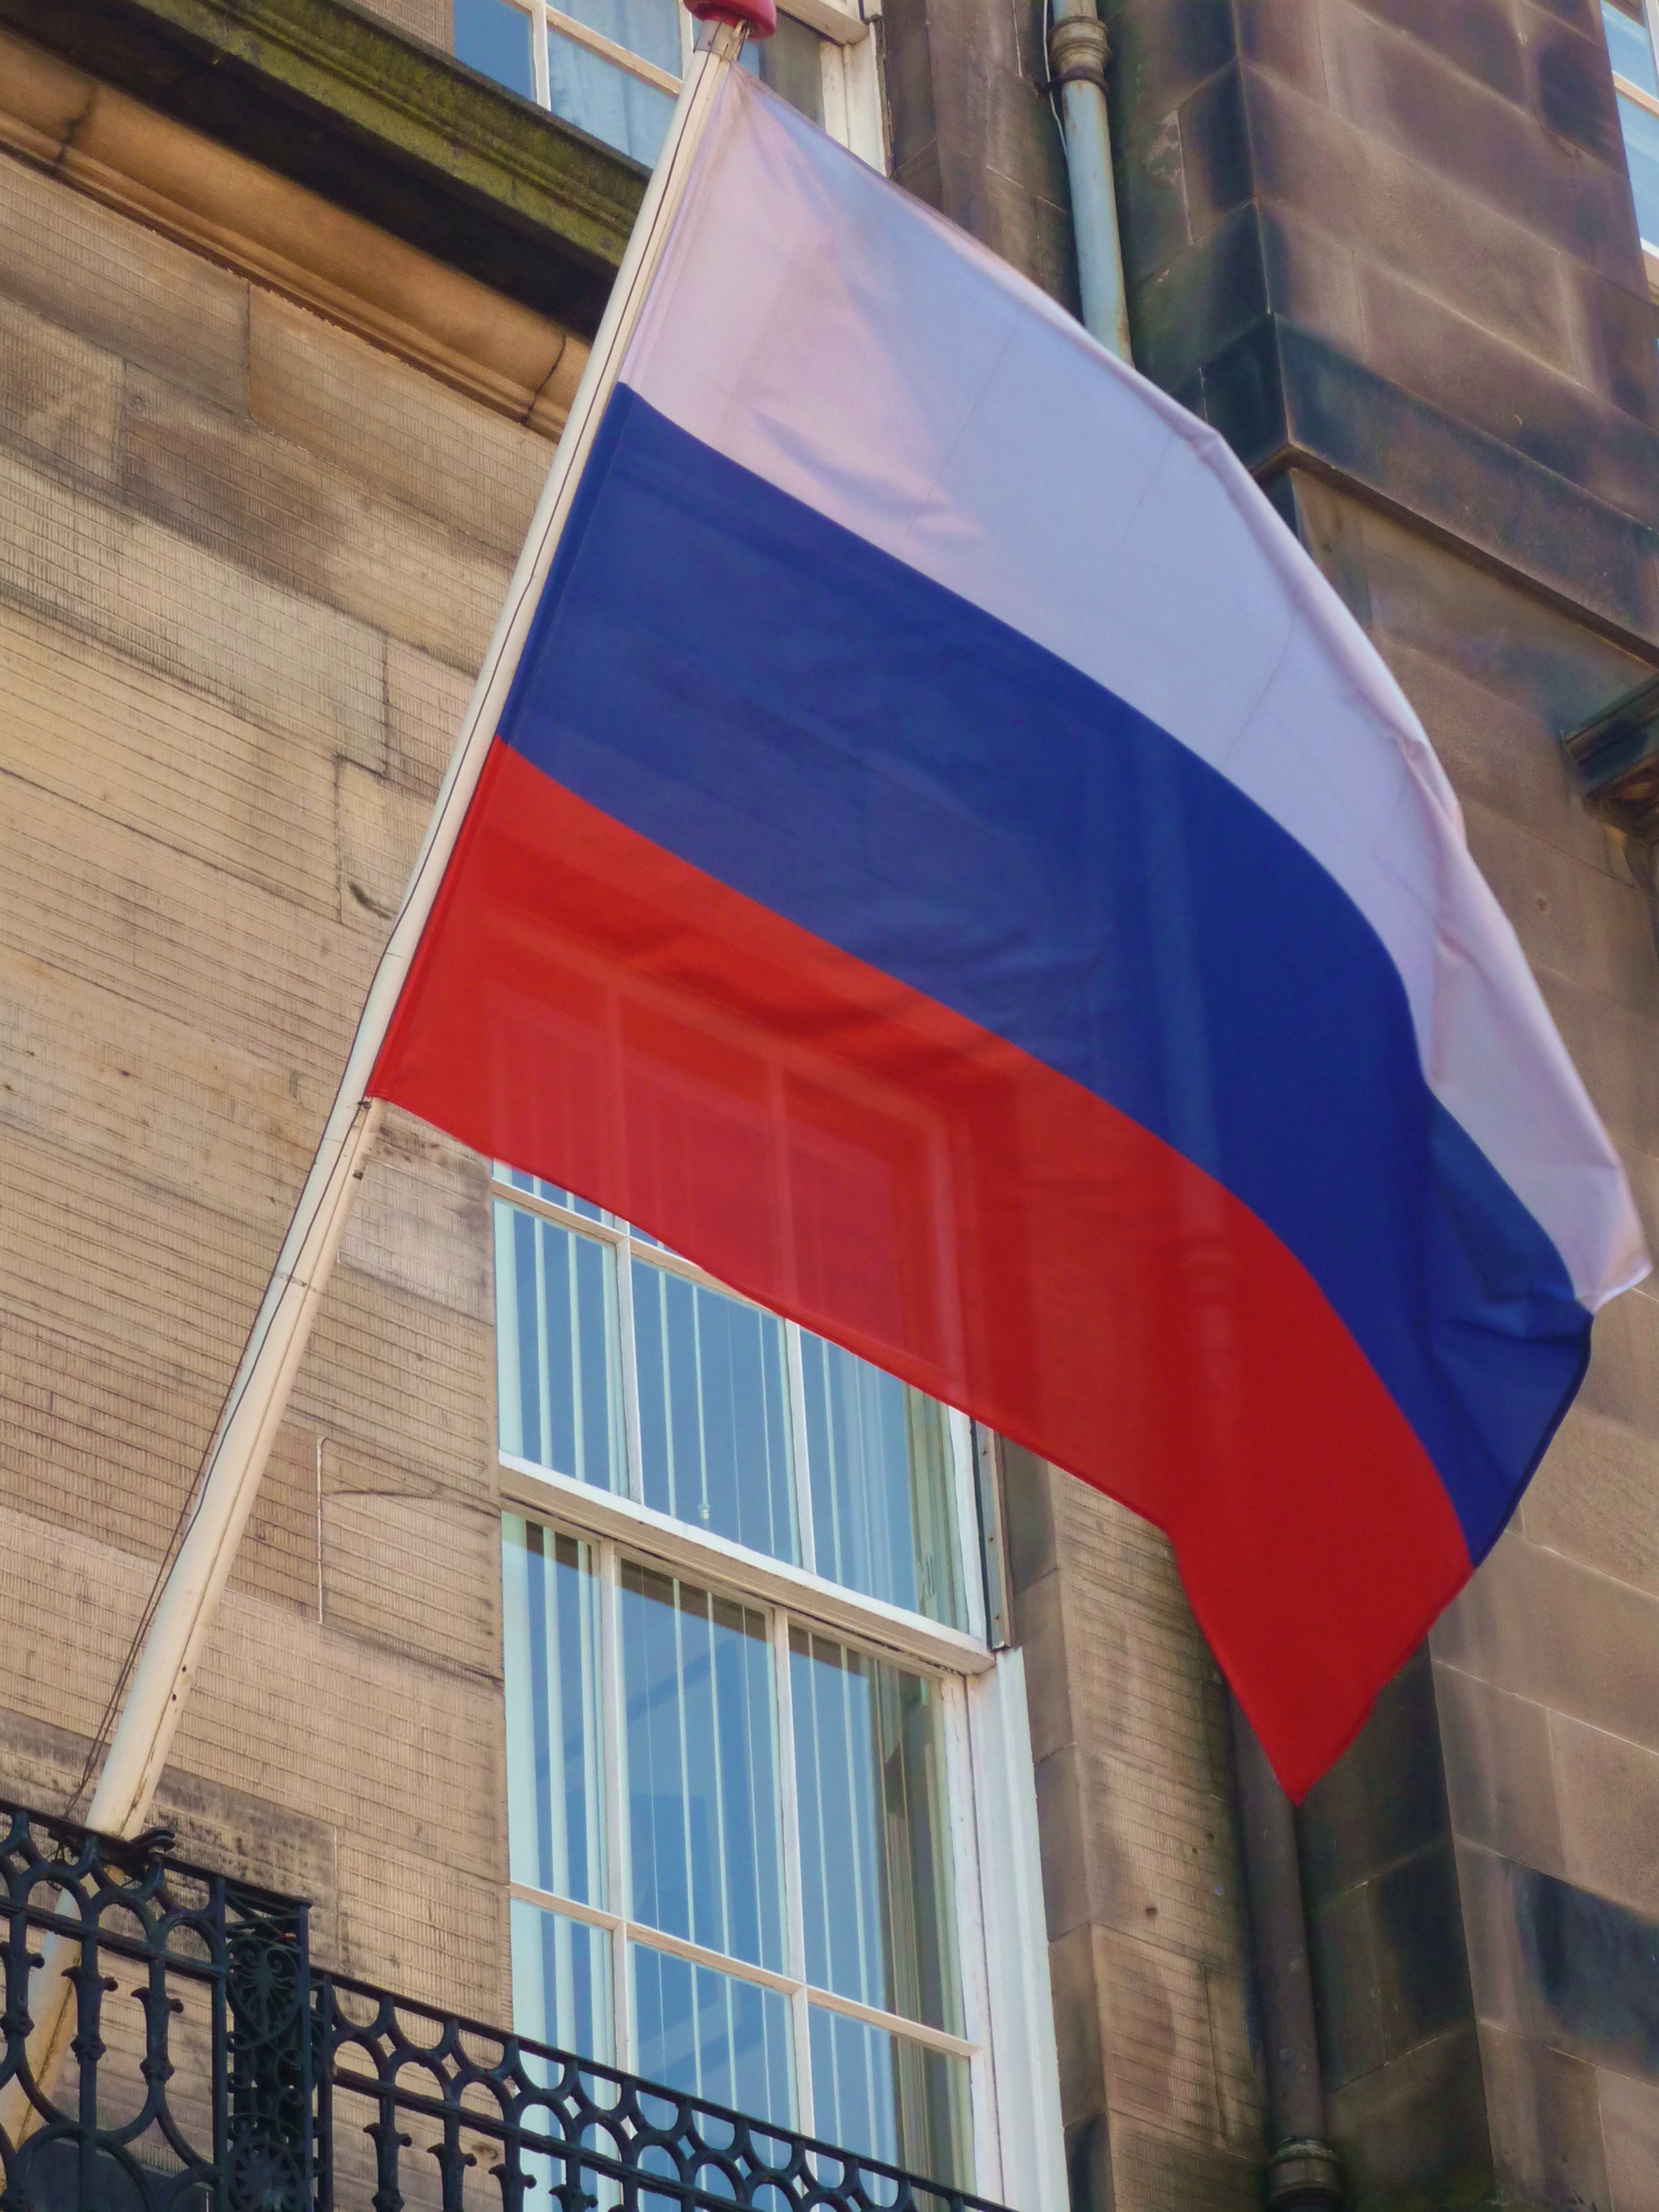 https://upload.wikimedia.org/wikipedia/commons/4/4c/Flag_at_Russian_Consulate-General_in_Edinburgh.jpg